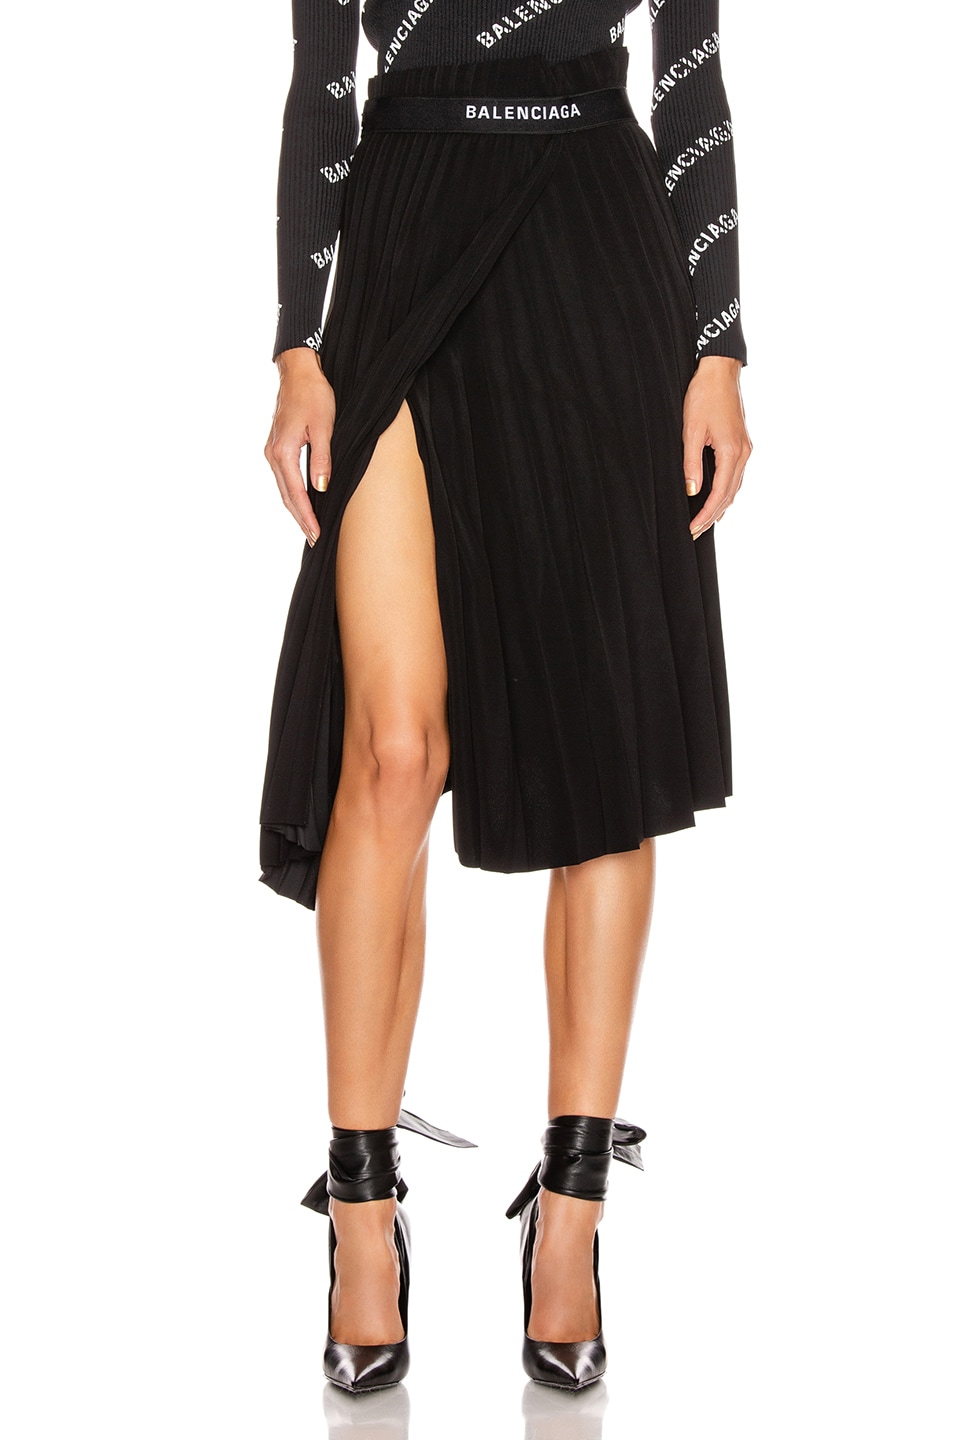 Balenciaga Elastic Skirt in Black | FWRD